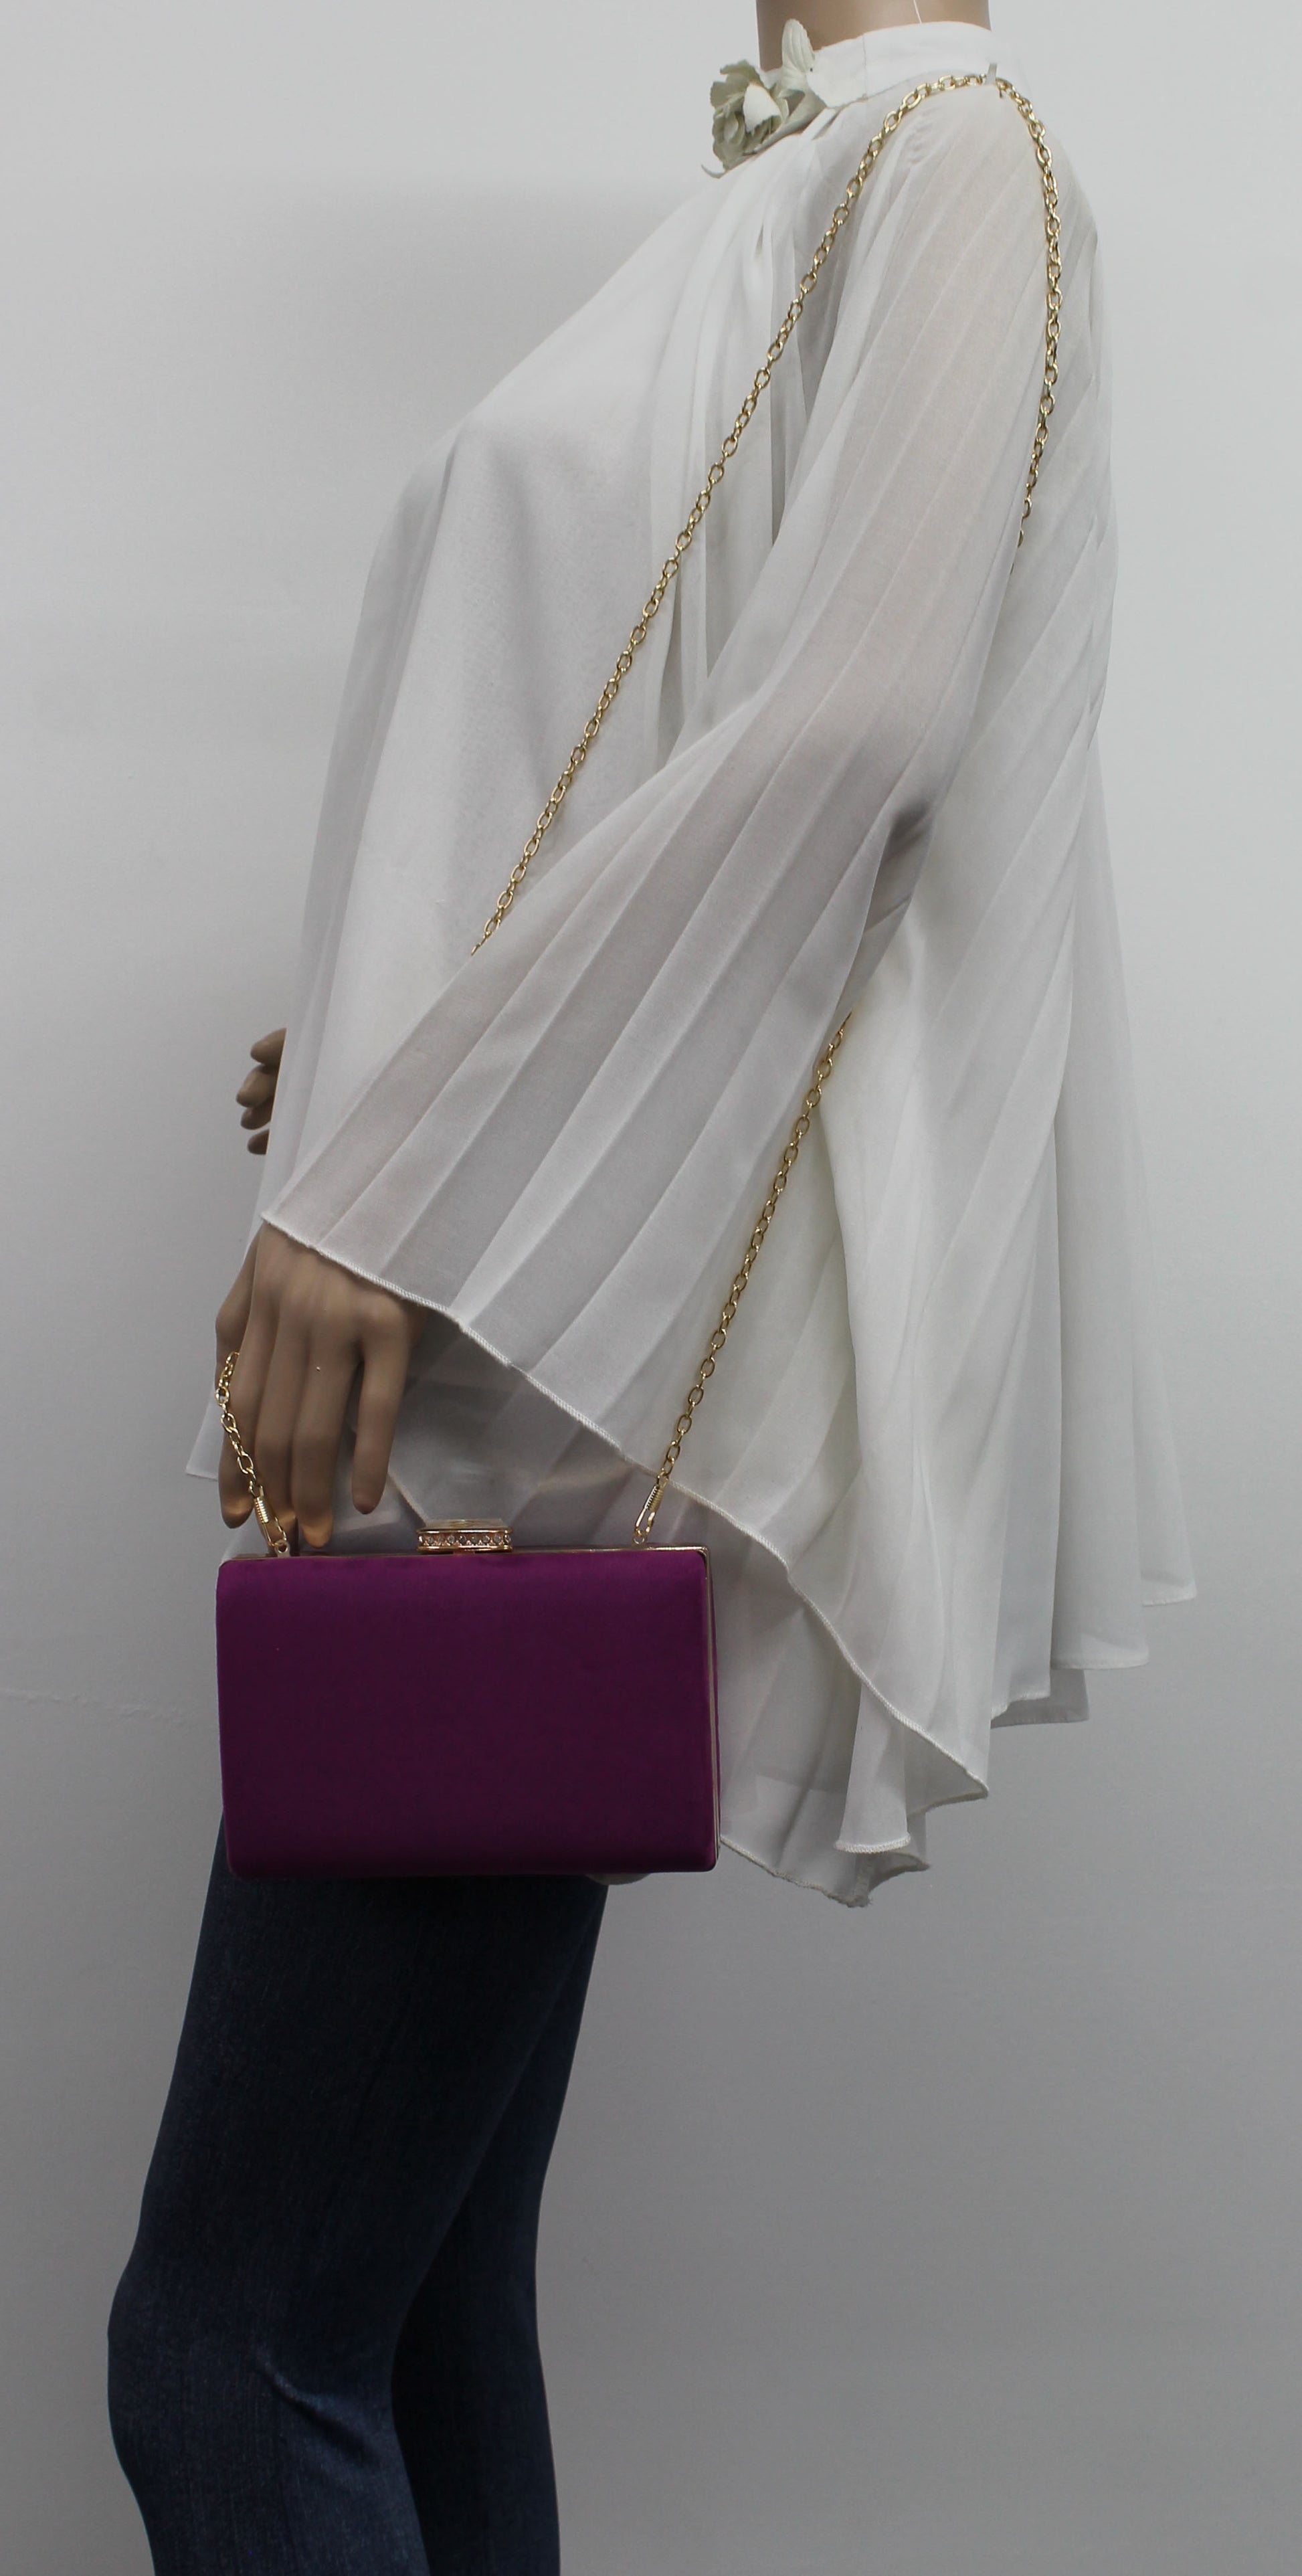 SWANKYSWANS Surrey Clutch Bag Purple Cute Cheap Clutch Bag For Weddings School and Work